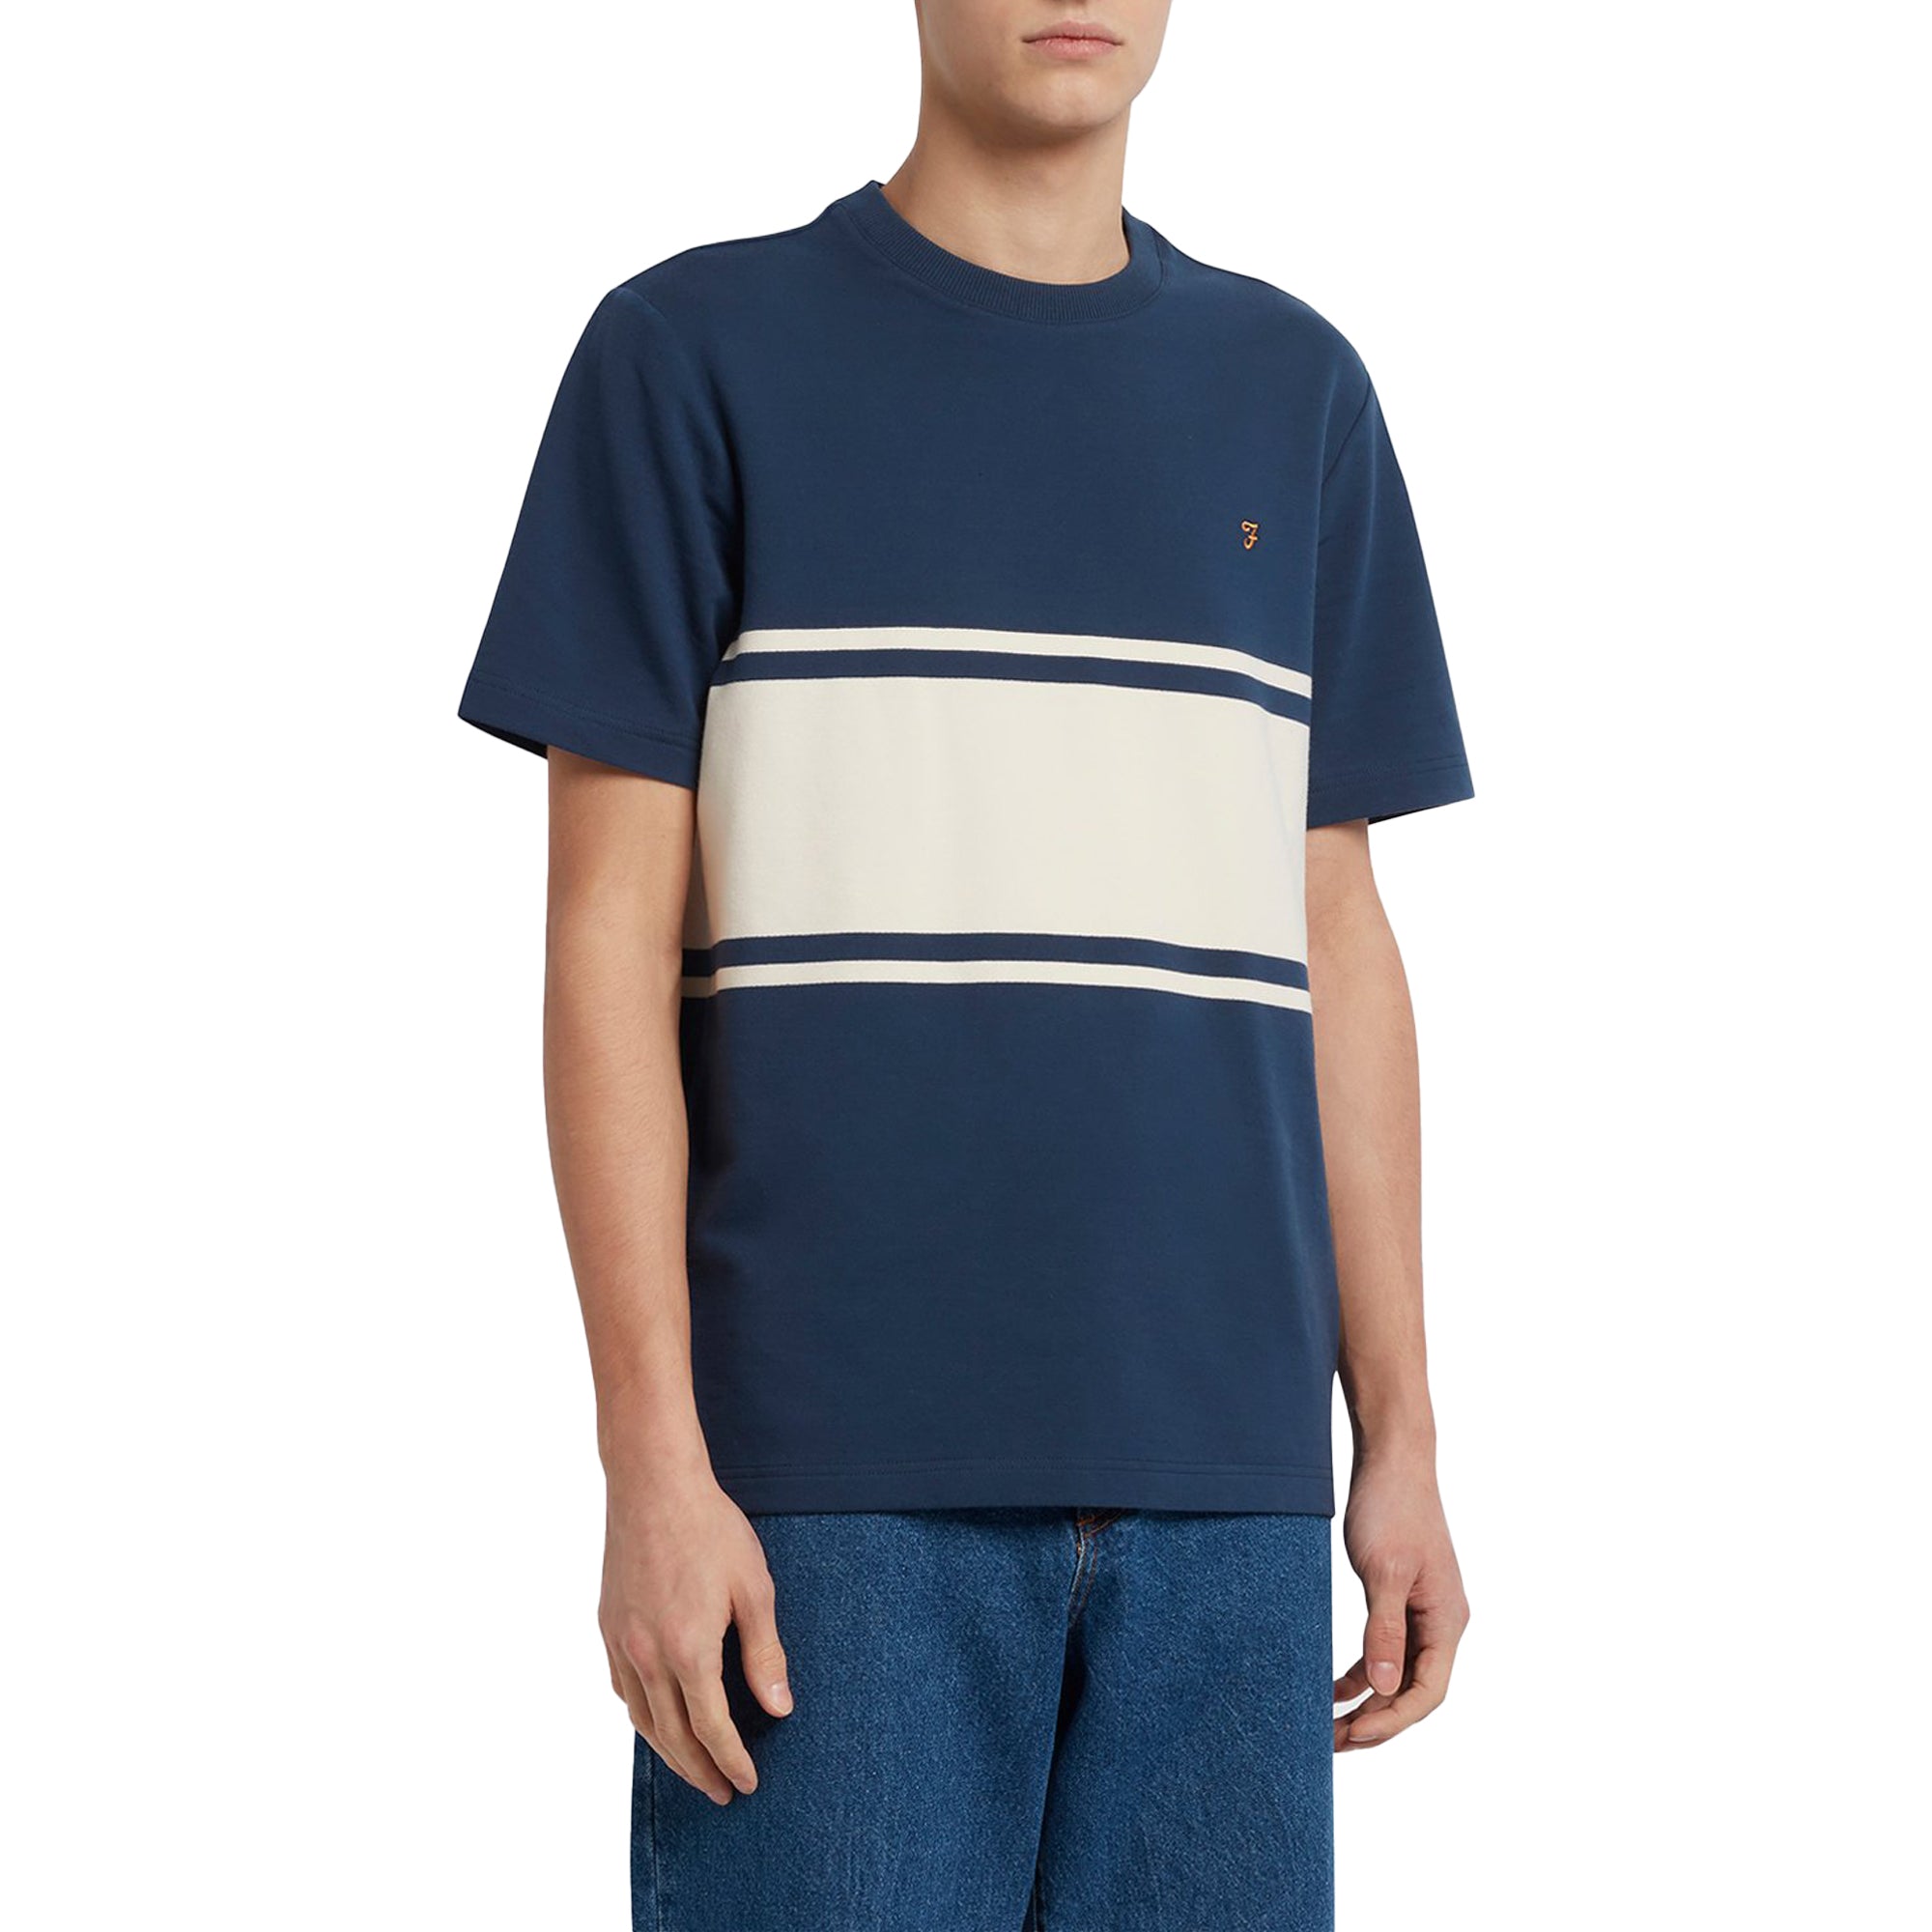 Farah Belair Block Stripe T-Shirt - Yale Blue